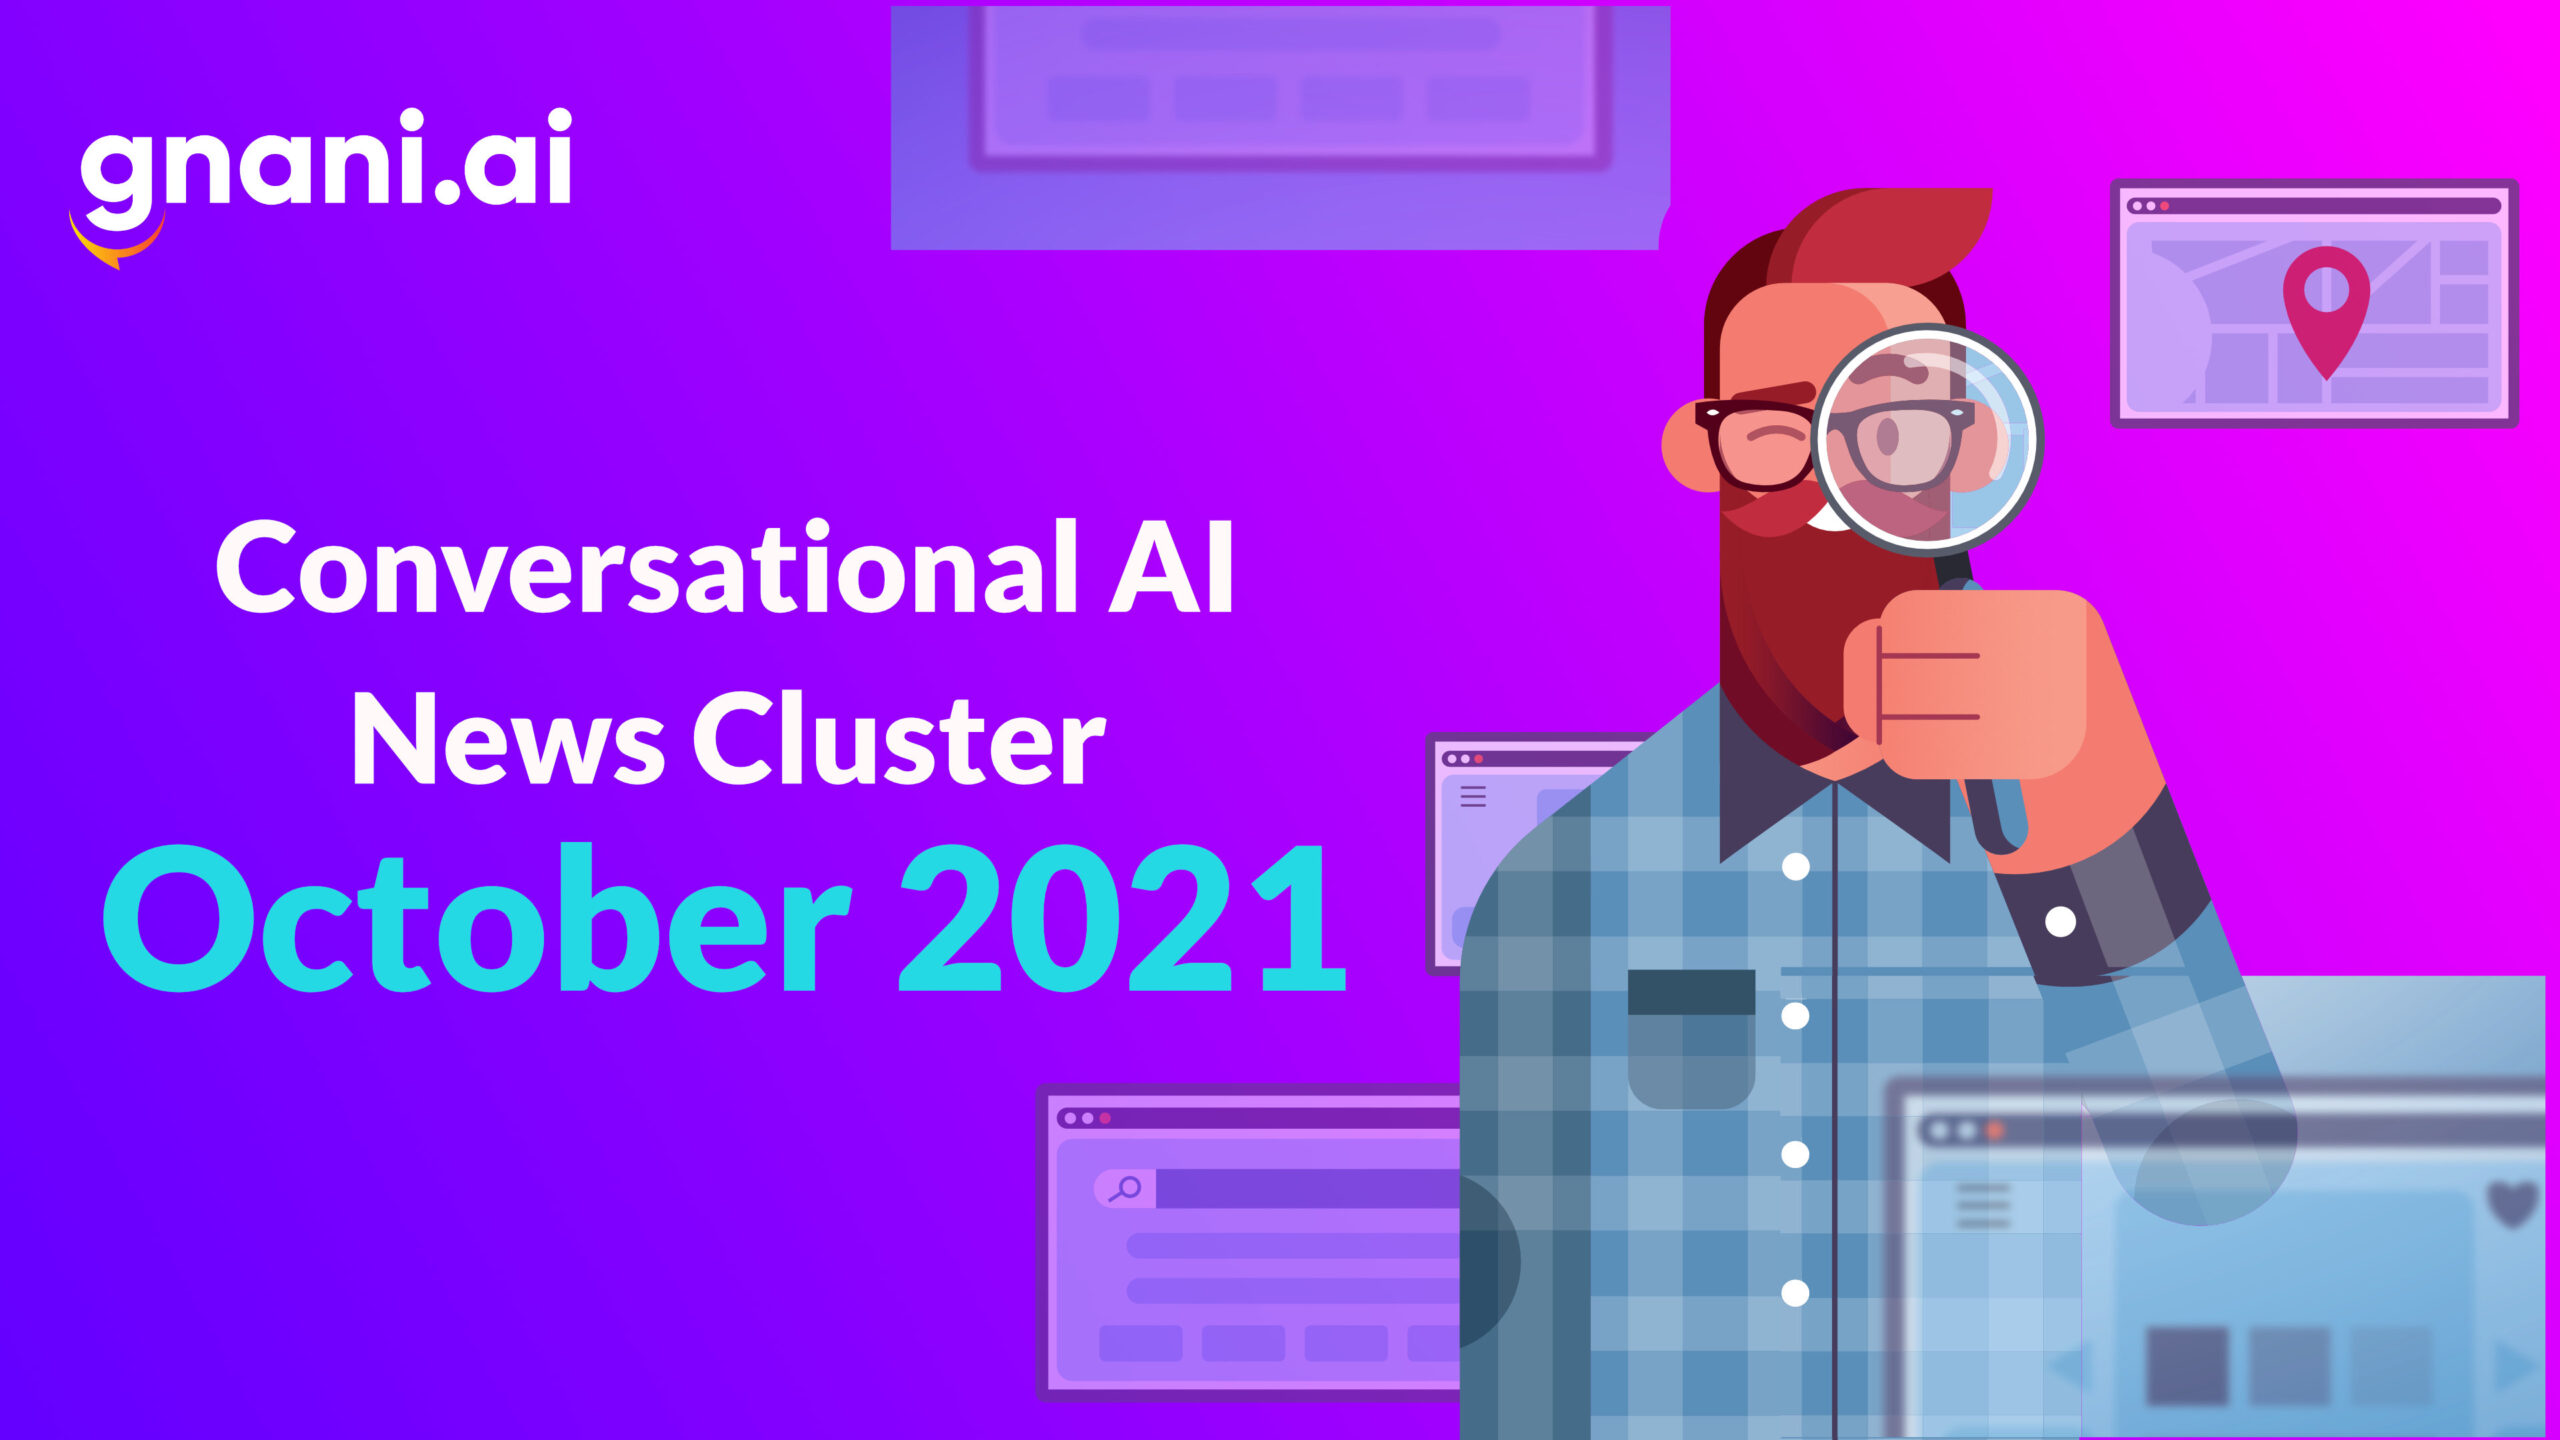 gnani conversational ai news cluster october 2021